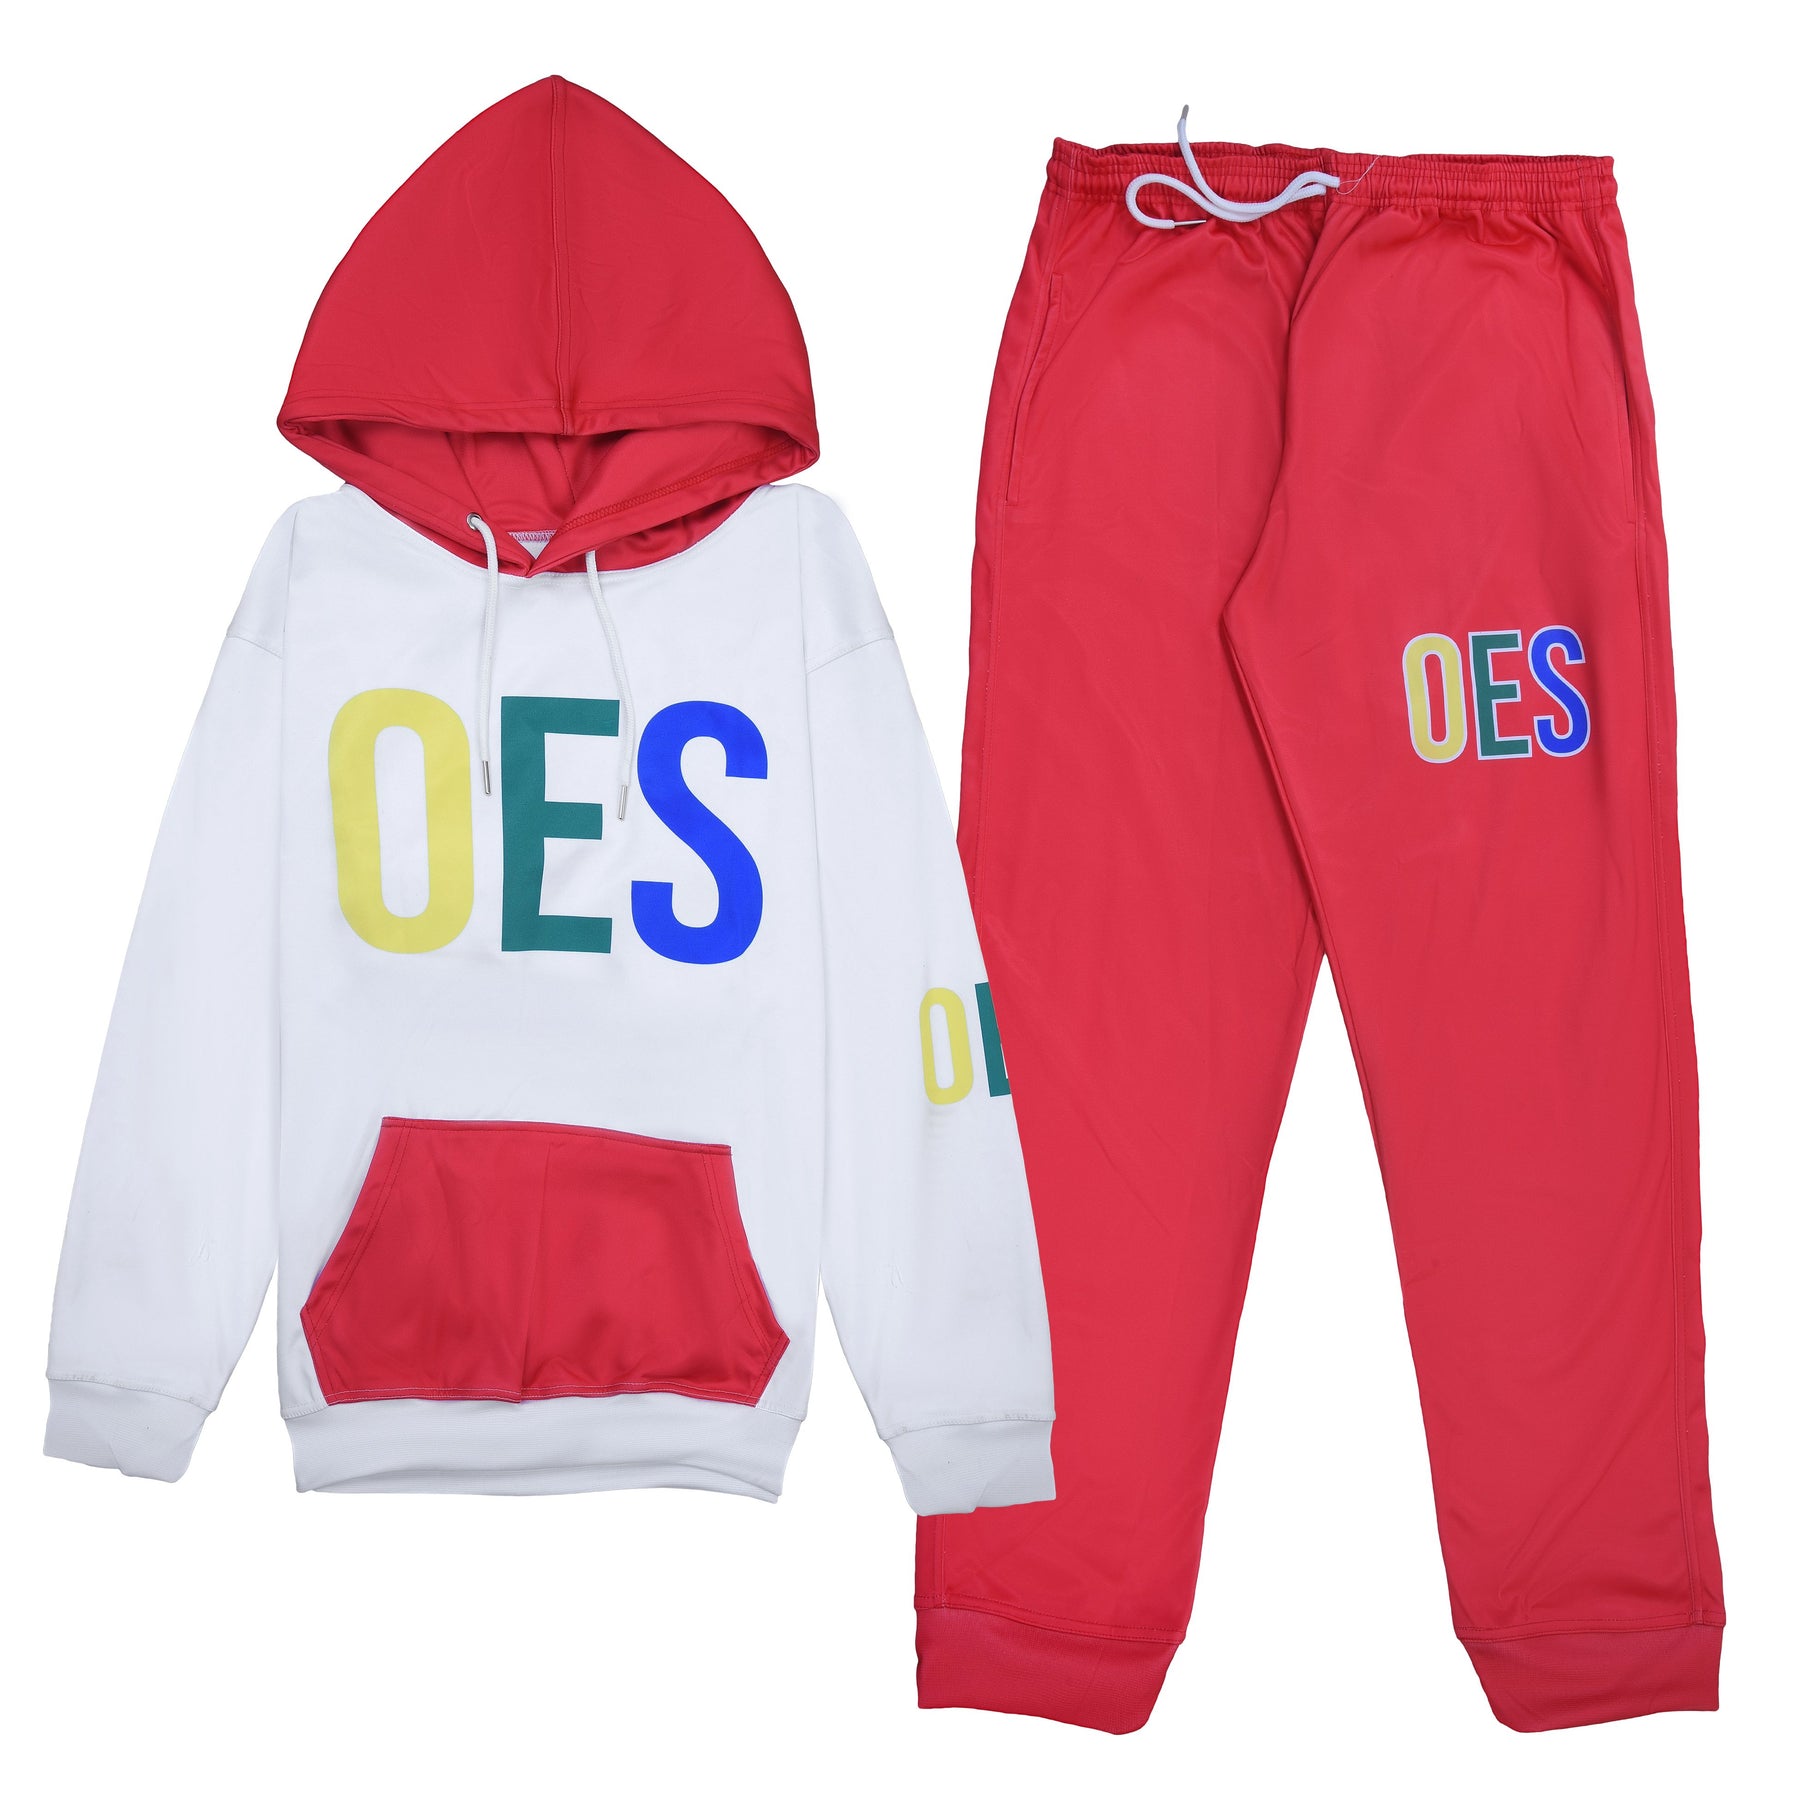 OES Tracksuit - Red & White - Bricks Masons